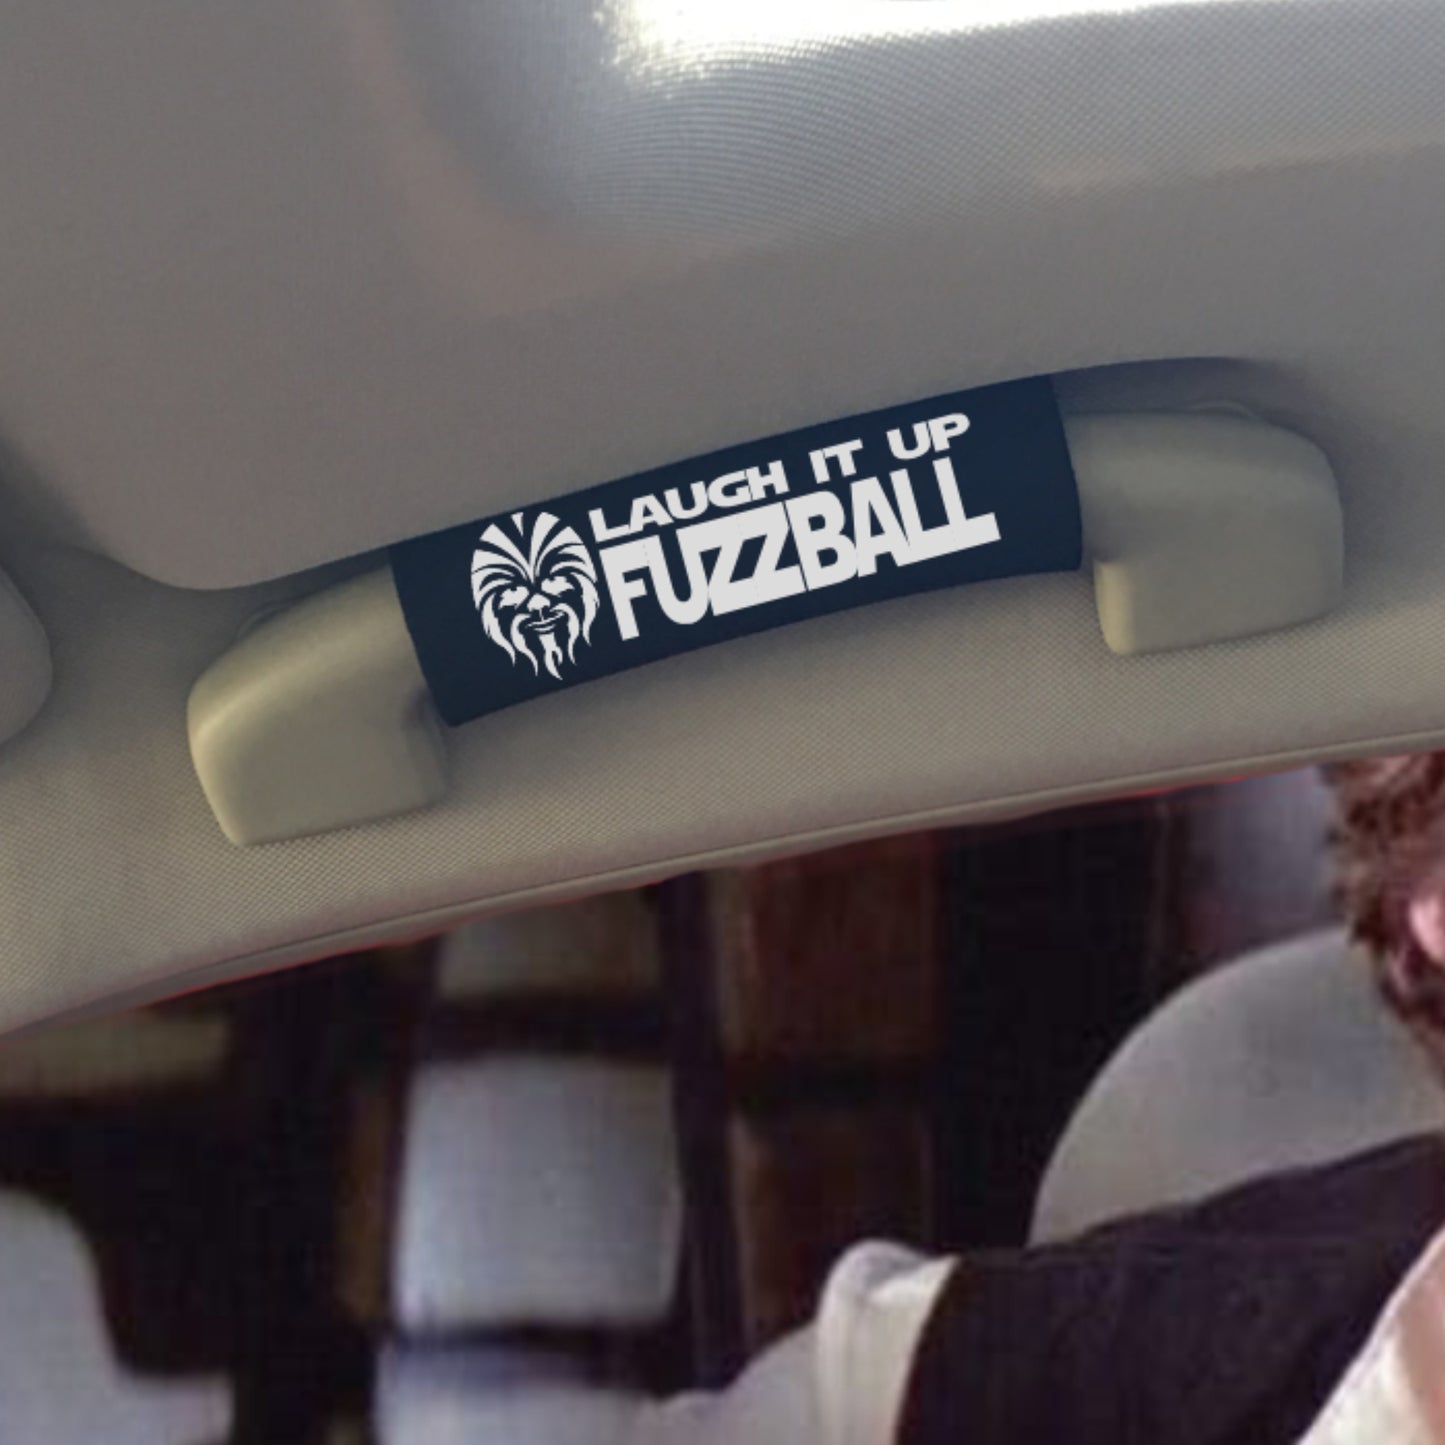 The Fuzzball Grip.